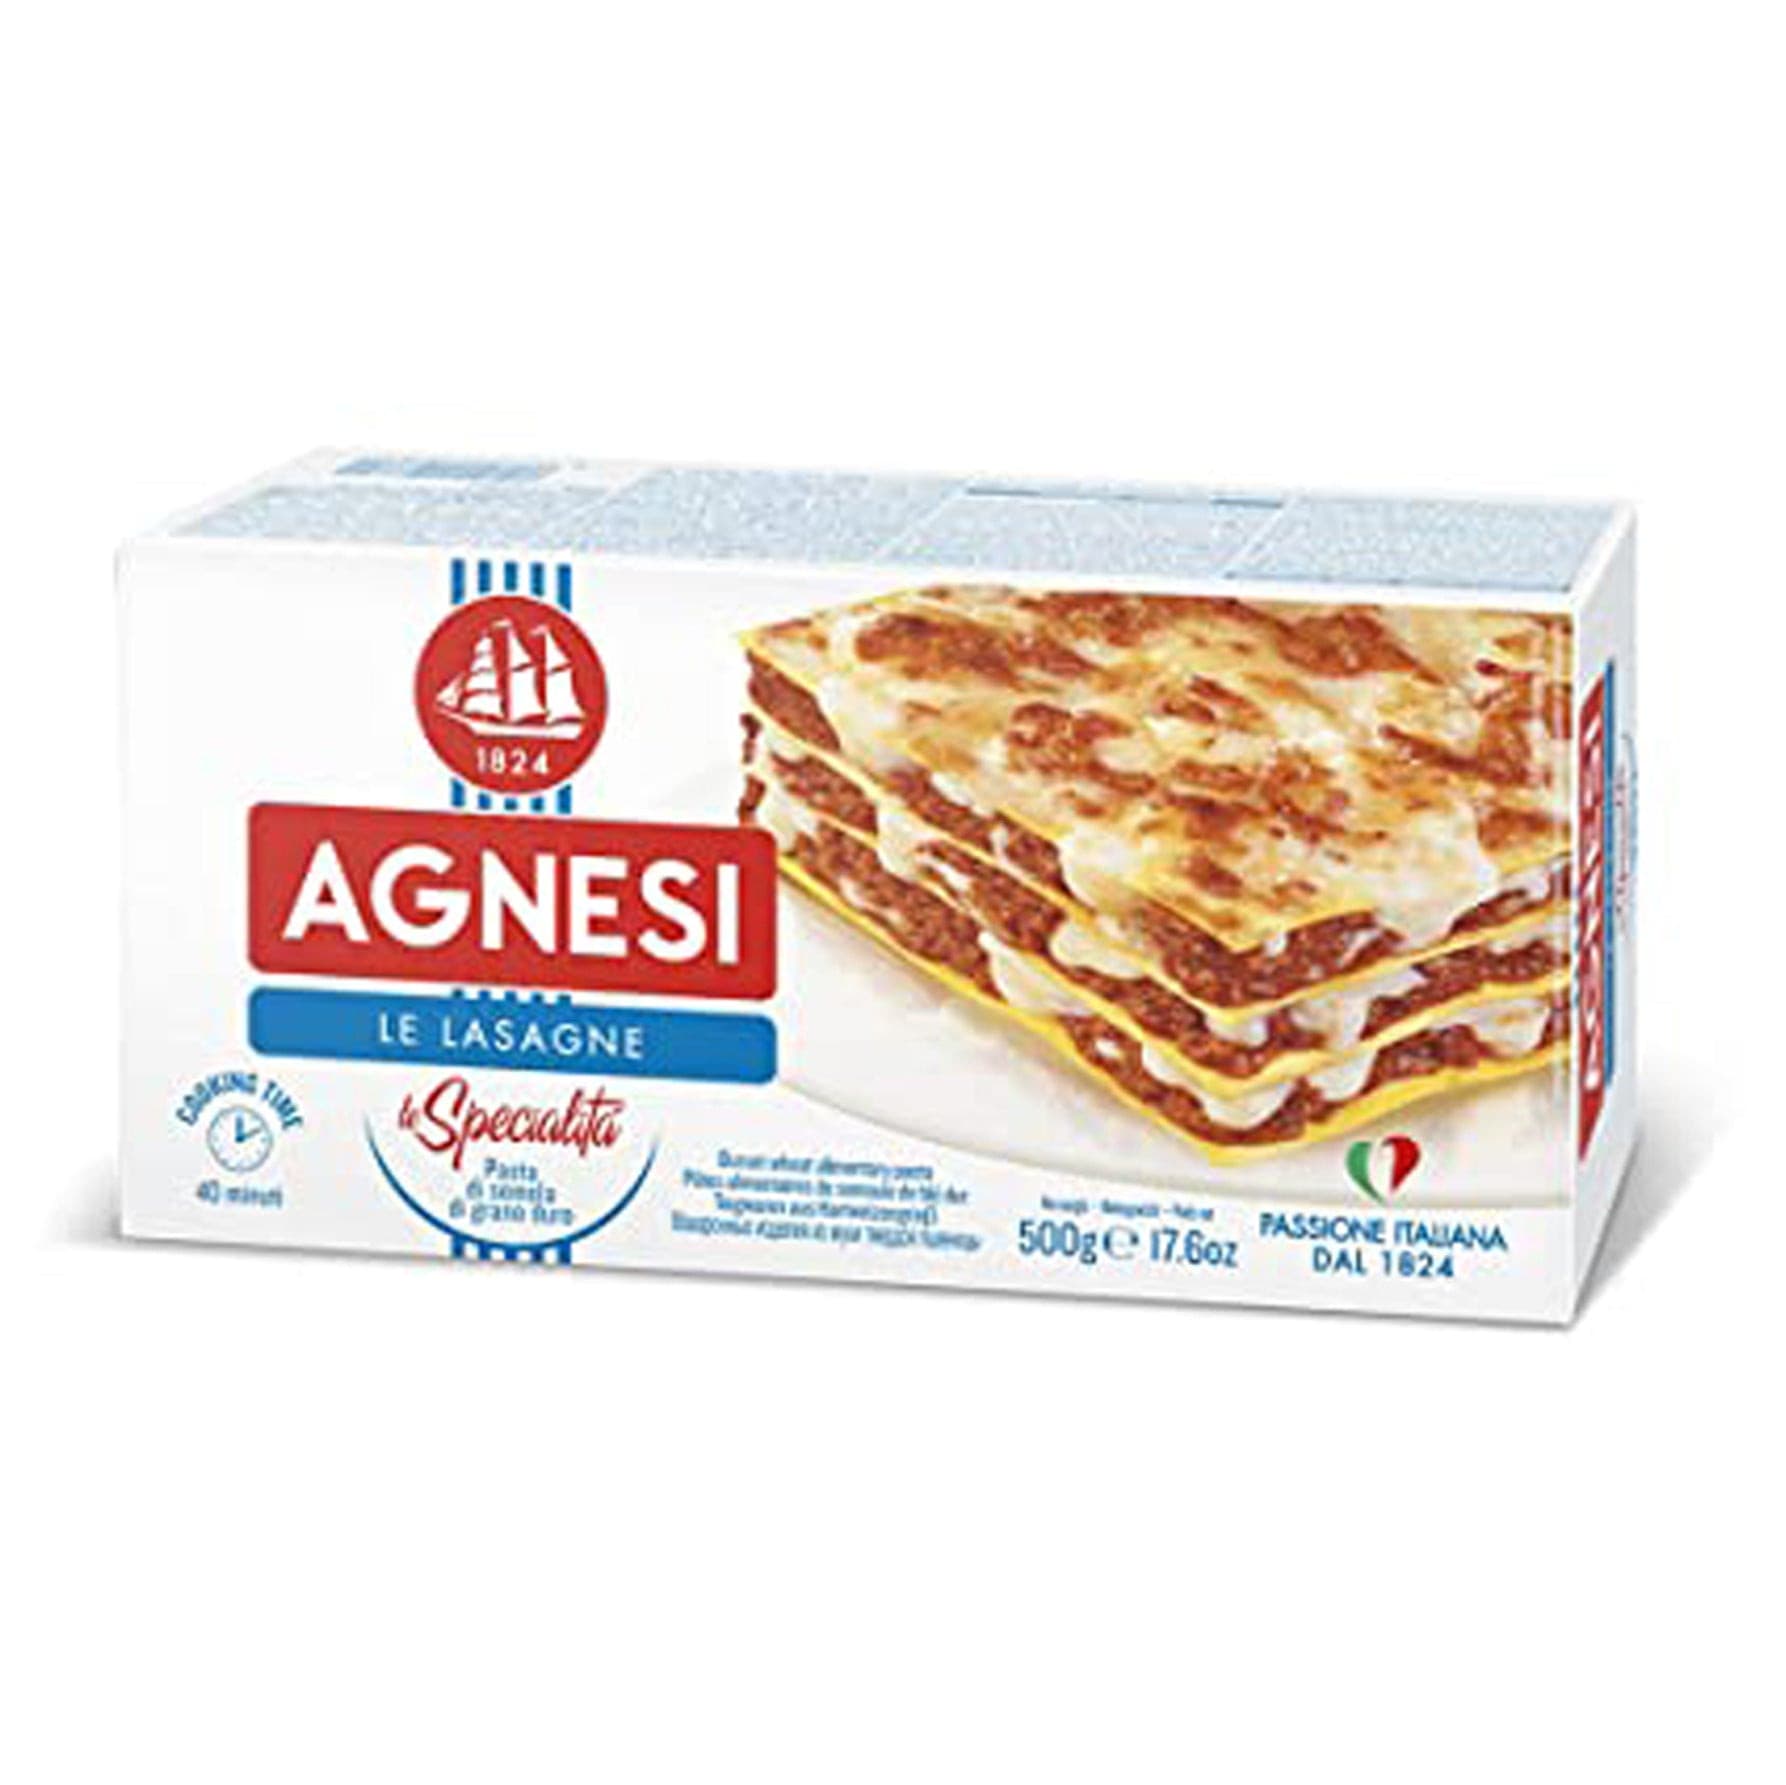 Agnesi Lasagne Sheets (7052774408379)